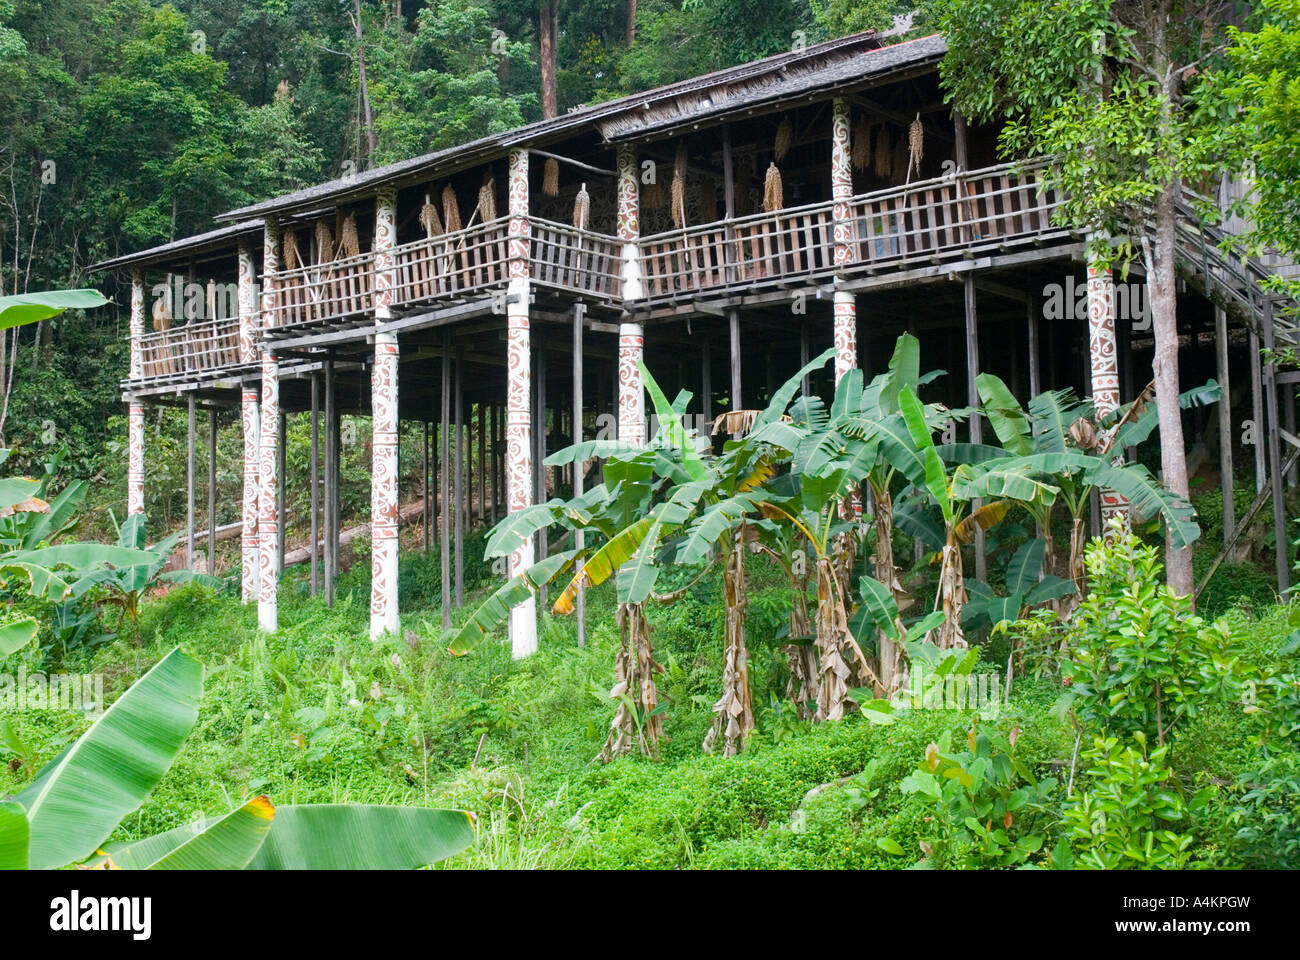 An Iban long house at the Sarawak Cultural Centre Stock Photo